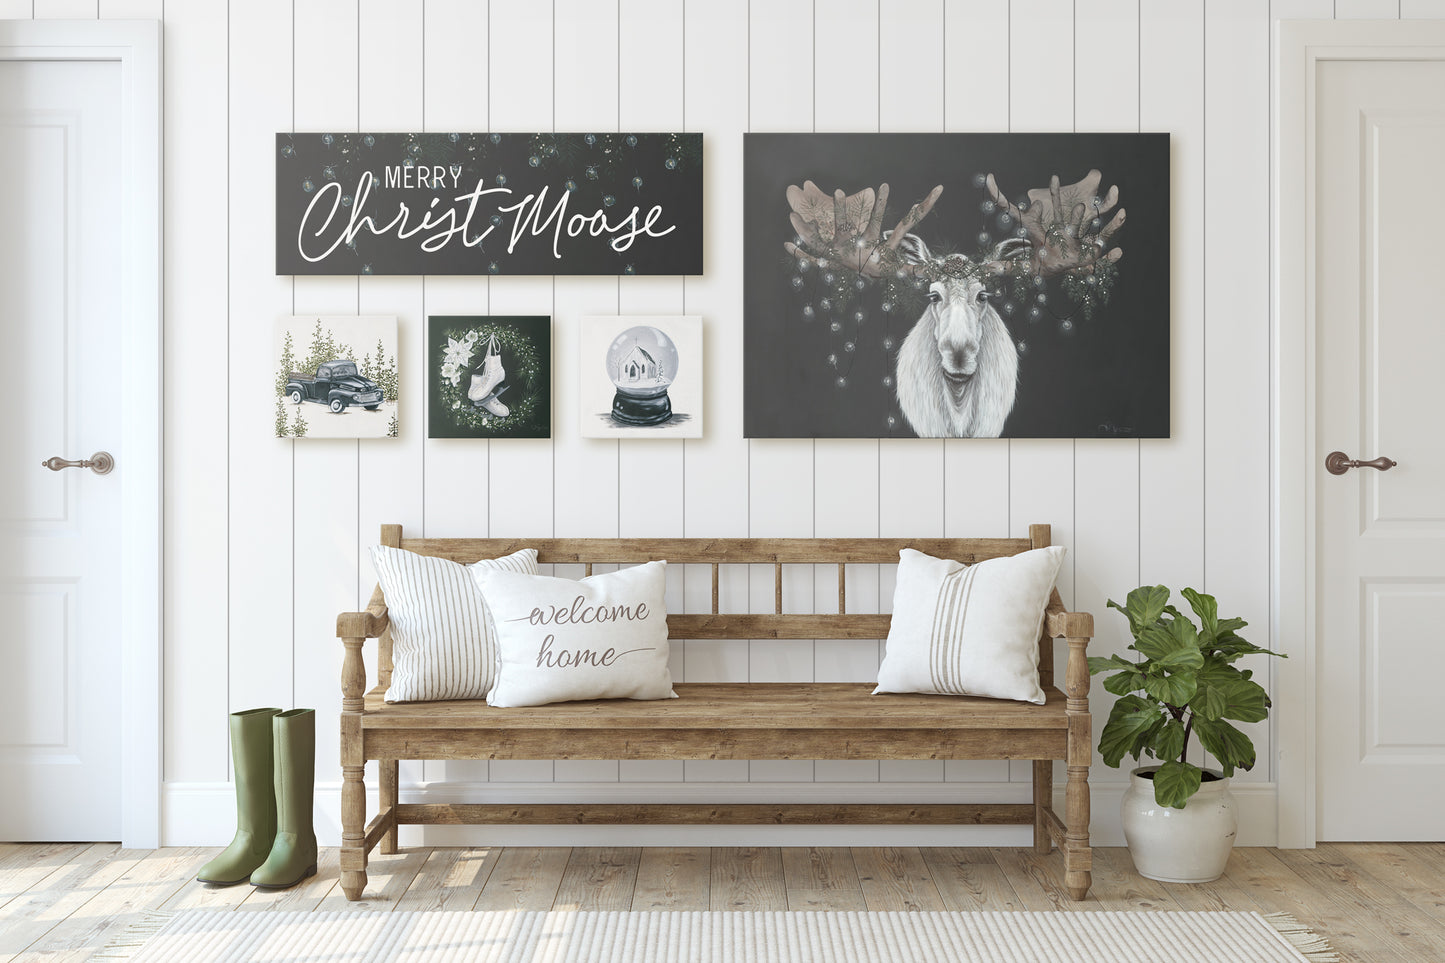 Merry Christ-Moose!